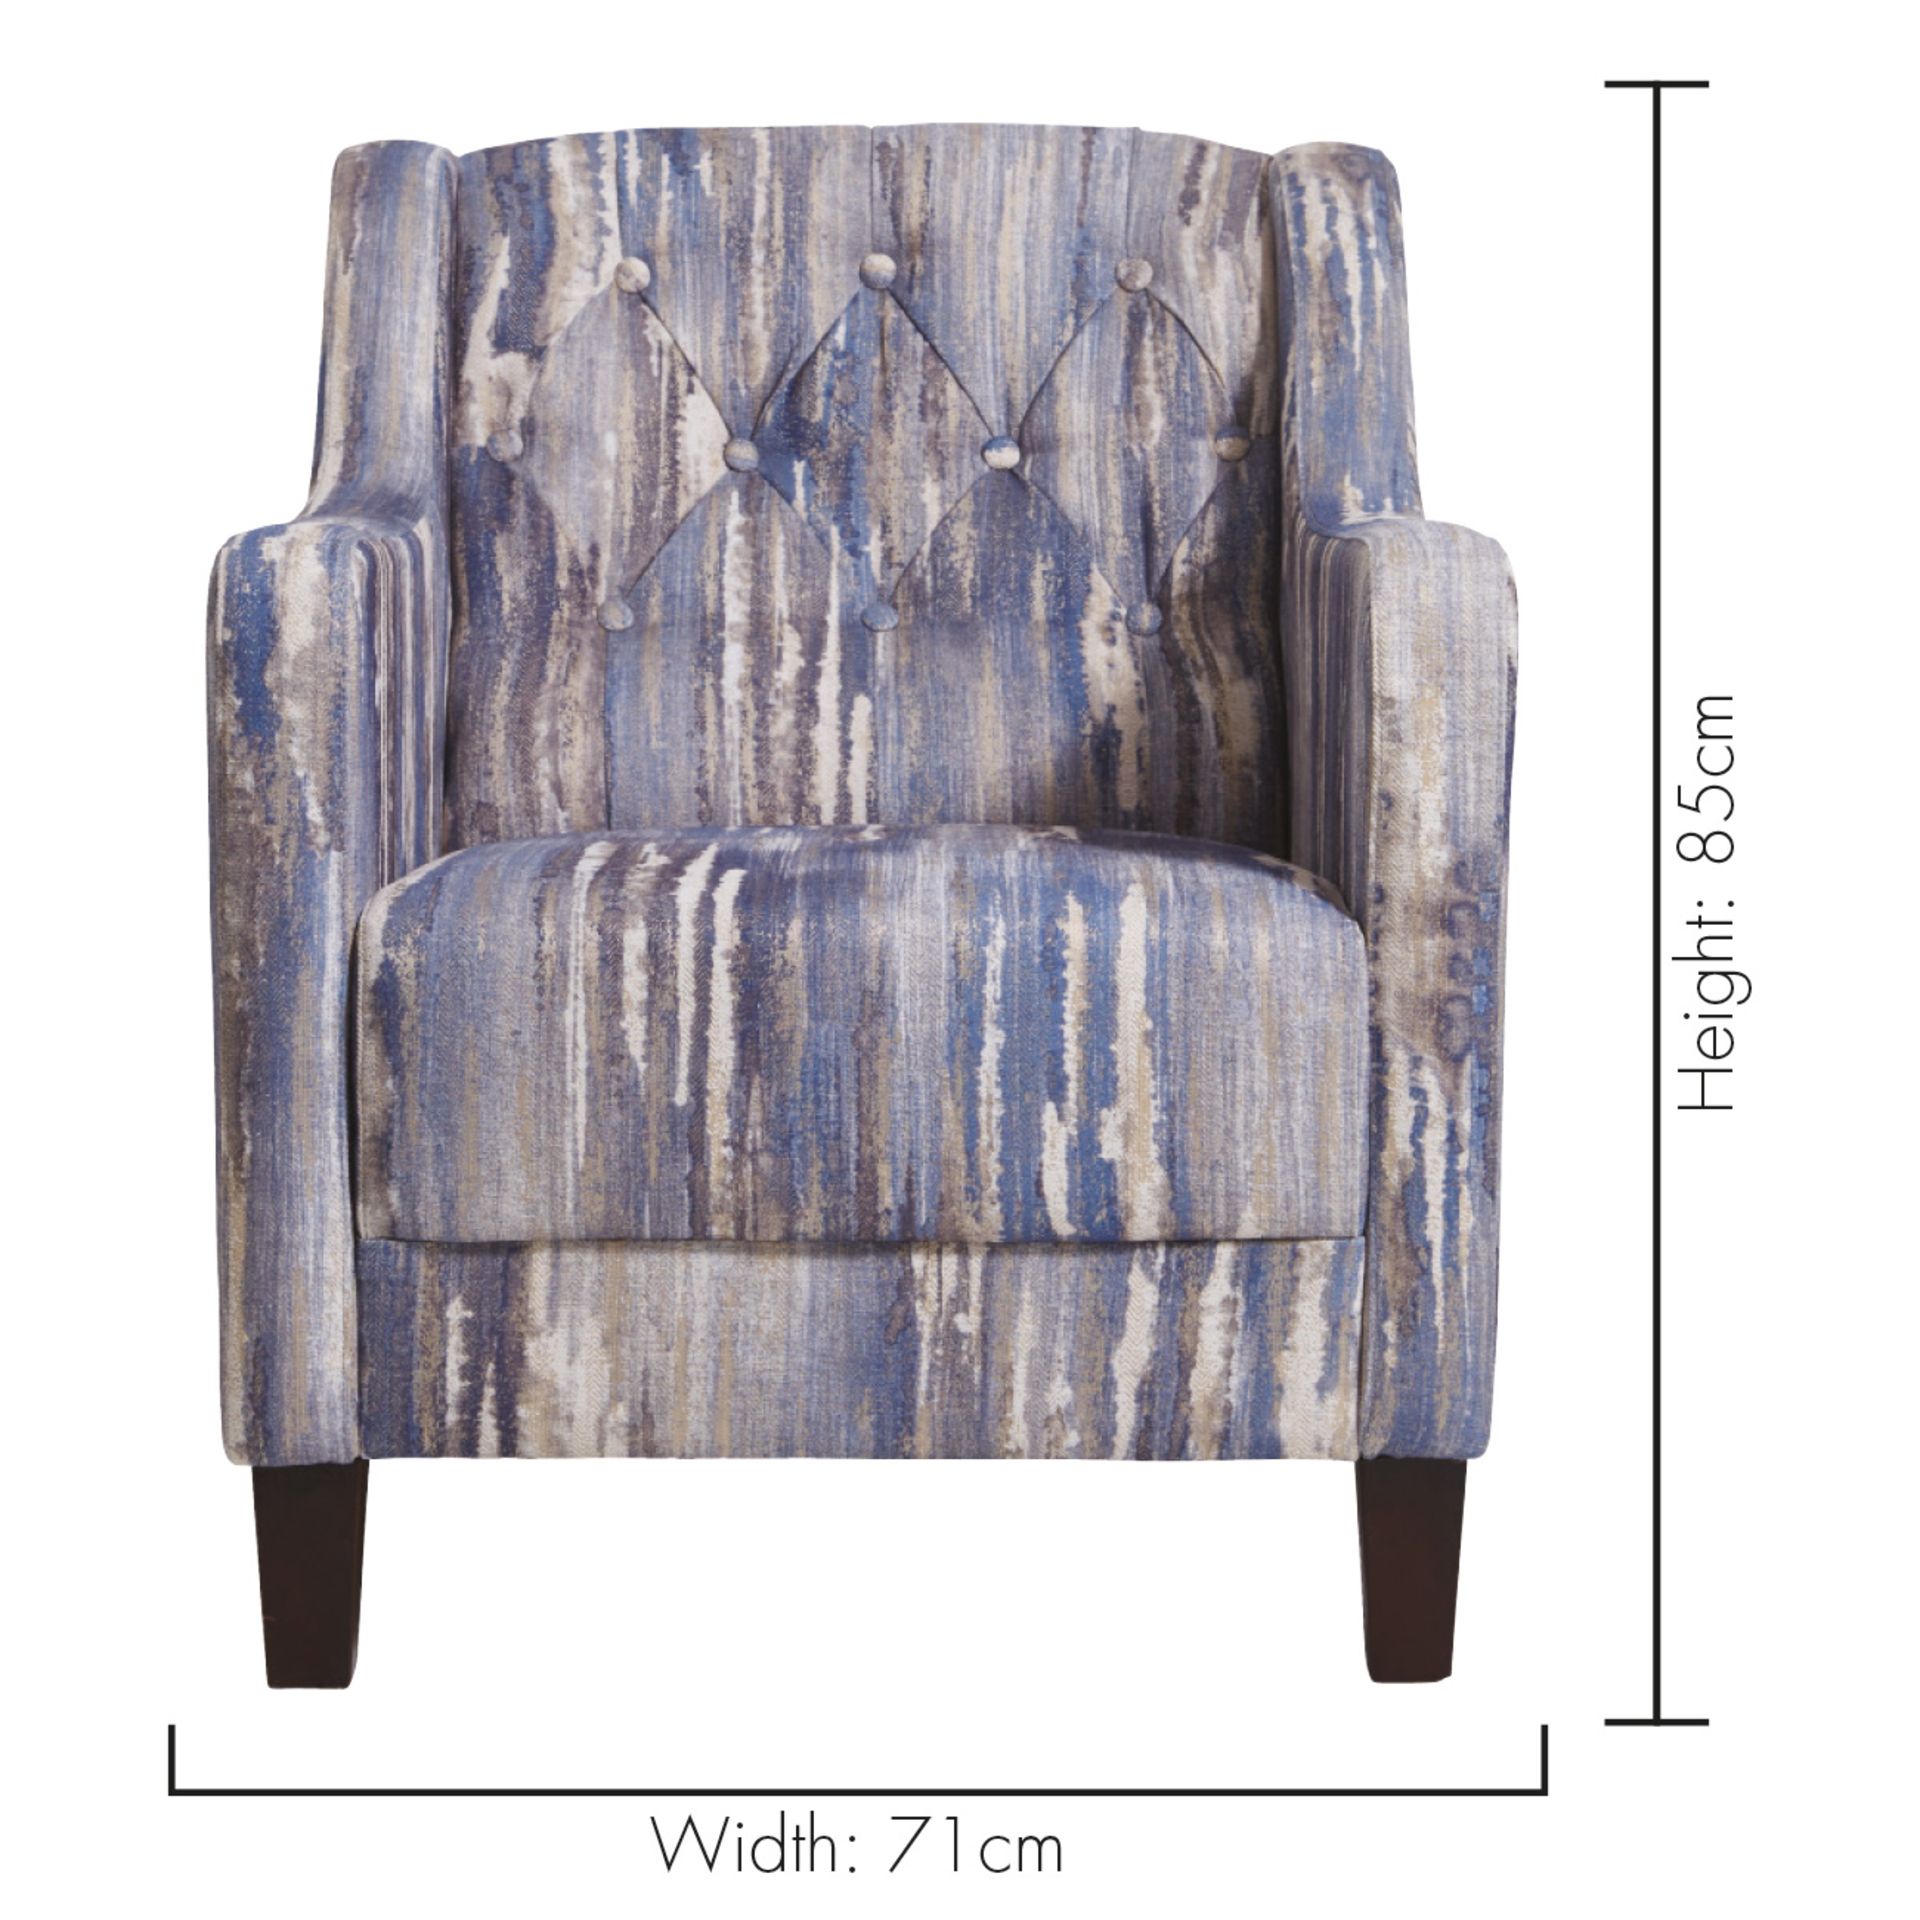 1 x Hampton Armchair by Clarke & Clarke - Latour Indigo Woven Fabric and Dark Wooden Legs - RRP £699 - Image 6 of 8